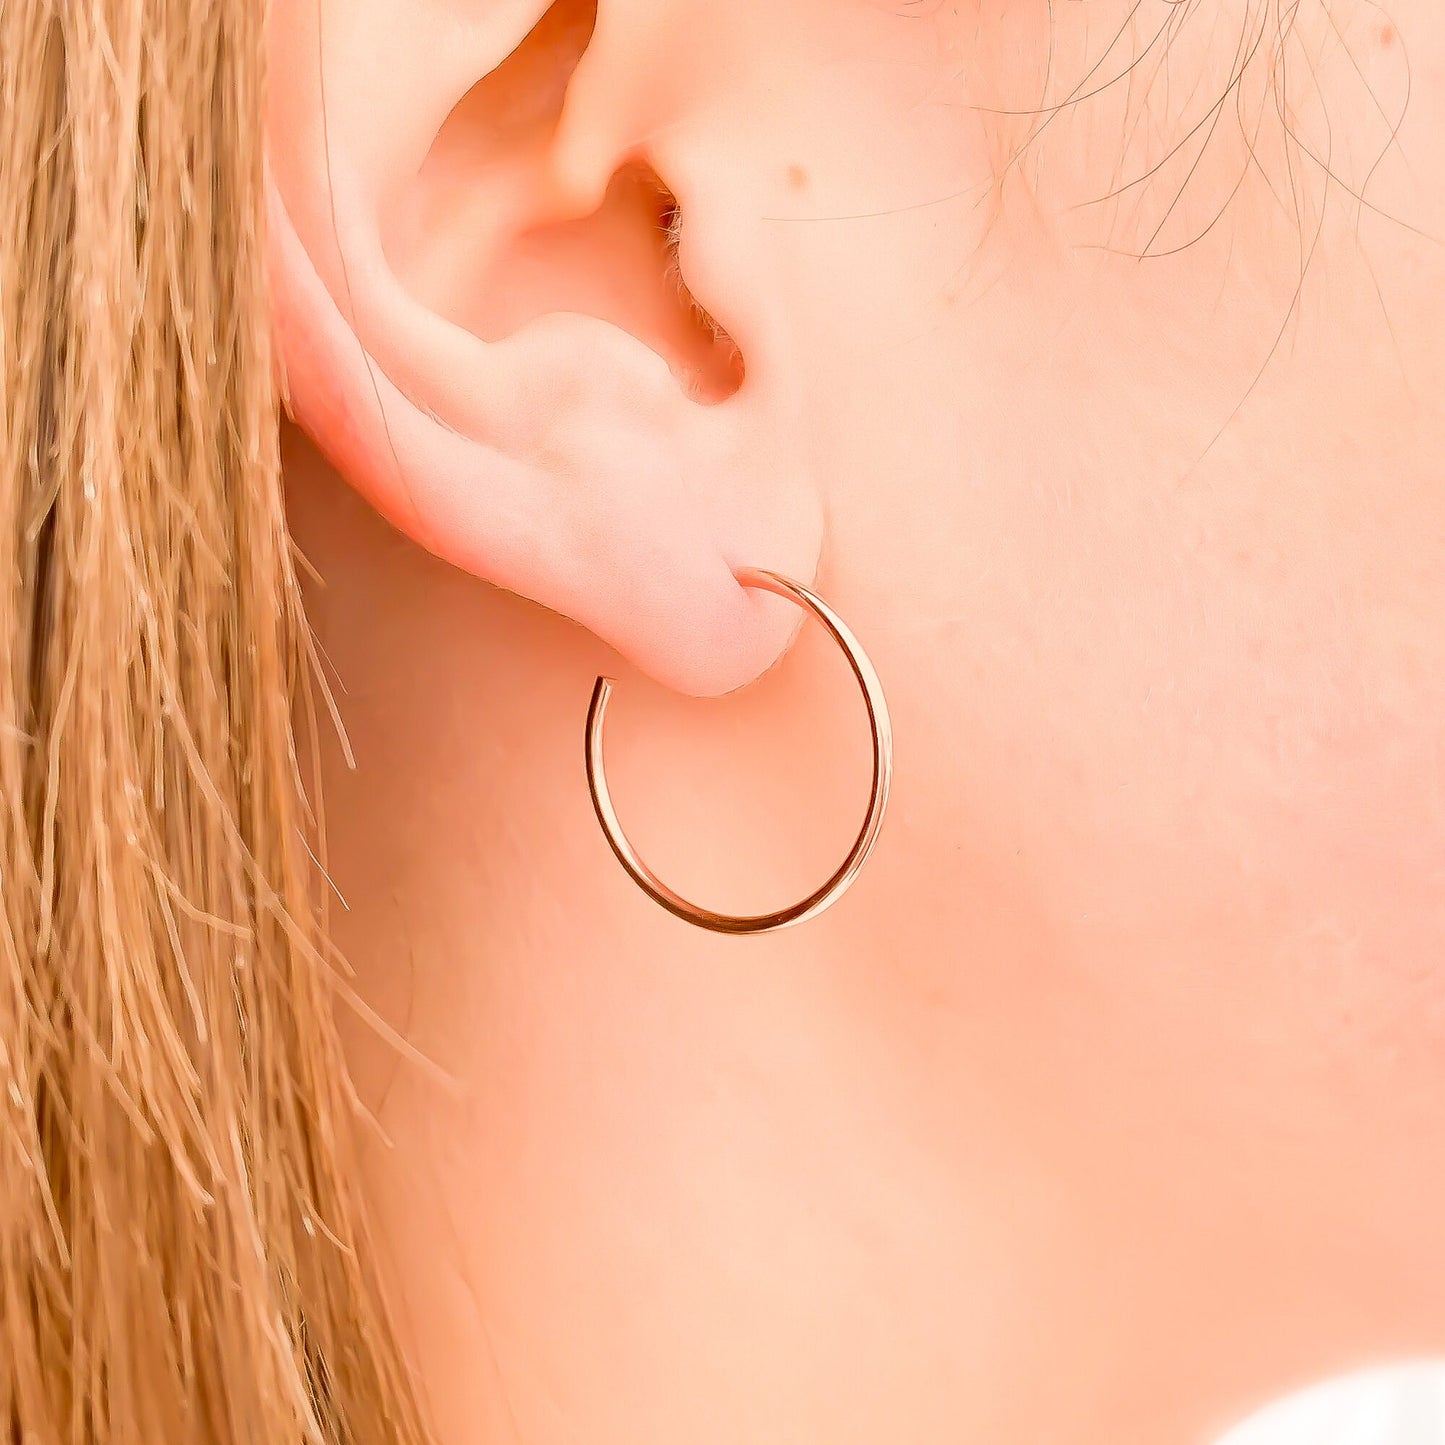 25mm Hoop Earrings, 14K Rose Gold Filled